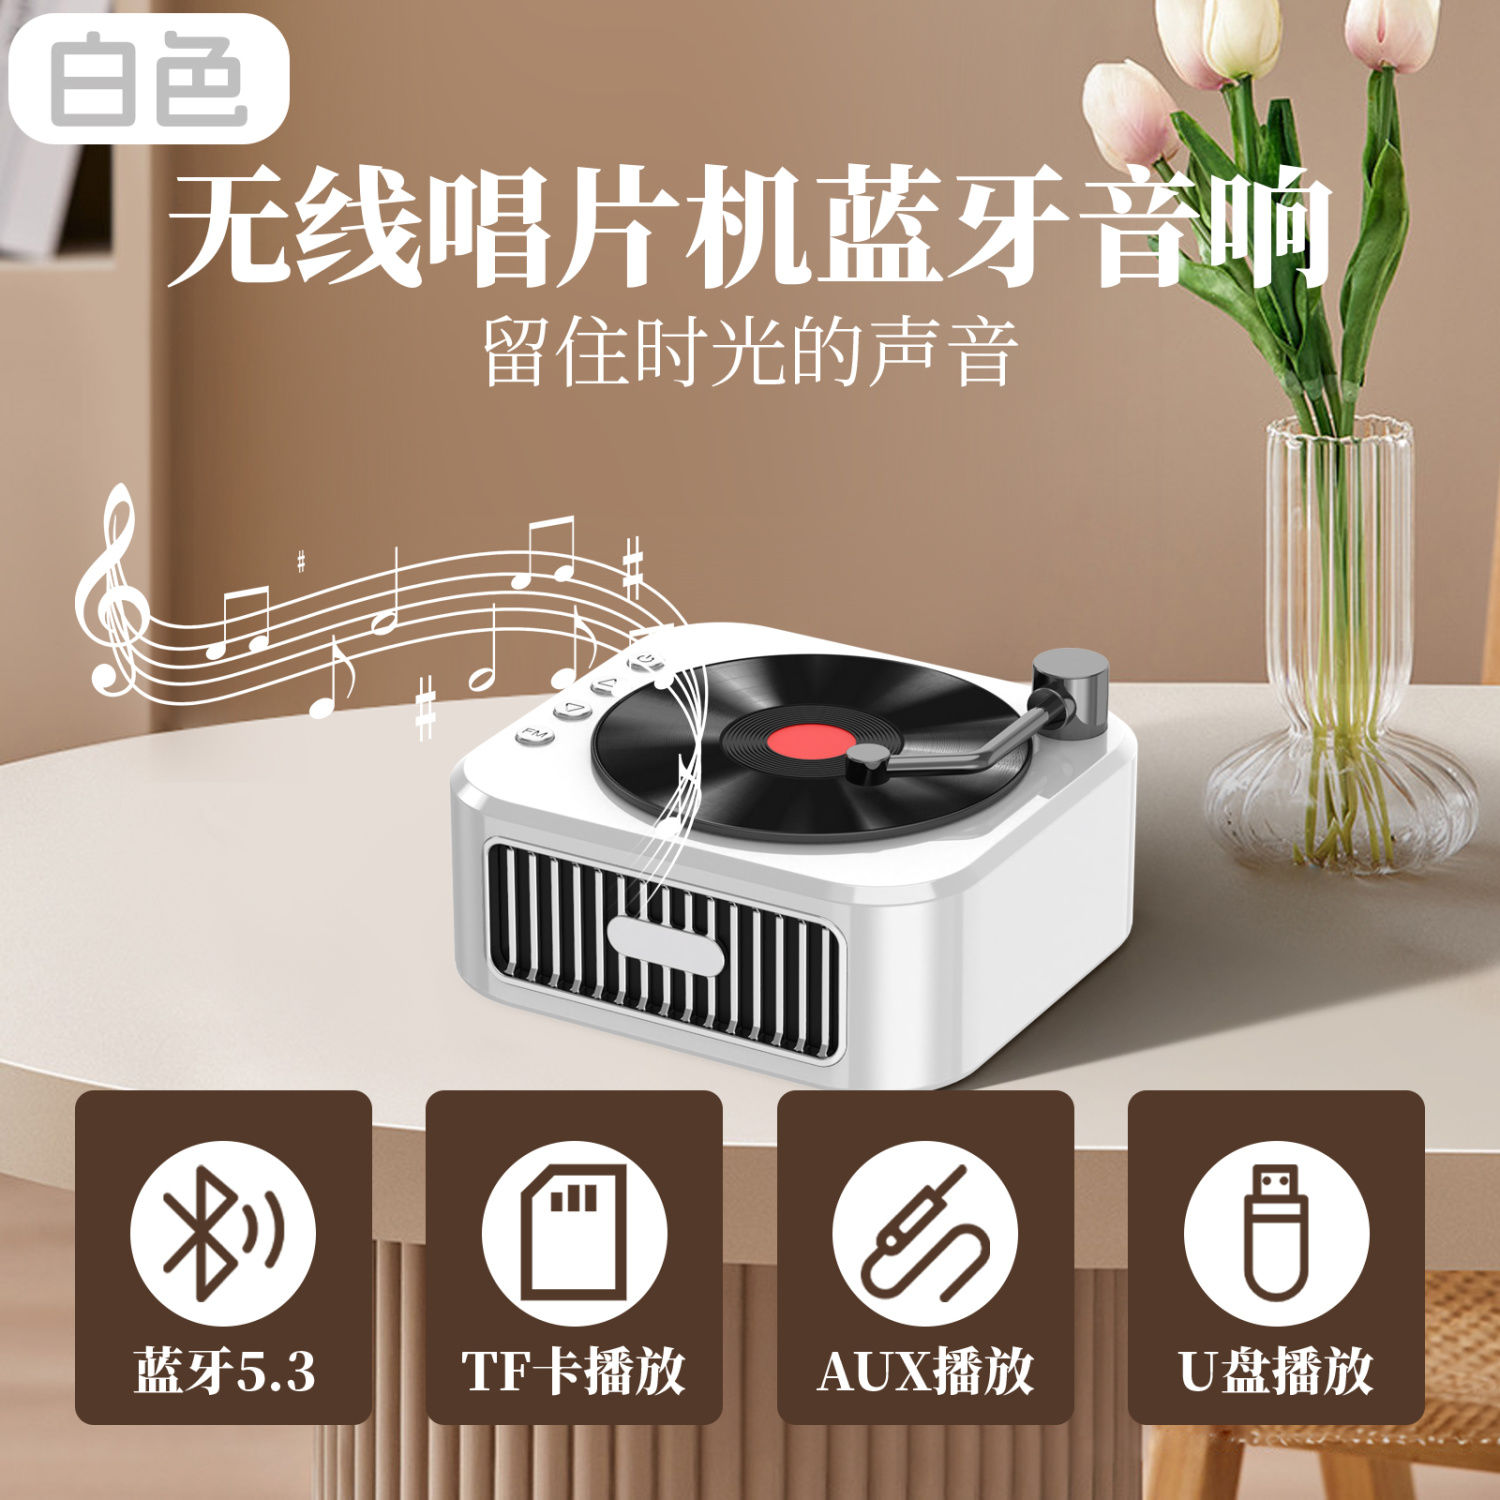 Bluetooth audio mini speaker record player vinyl subwoofer high volume small retro internet celebrity gift